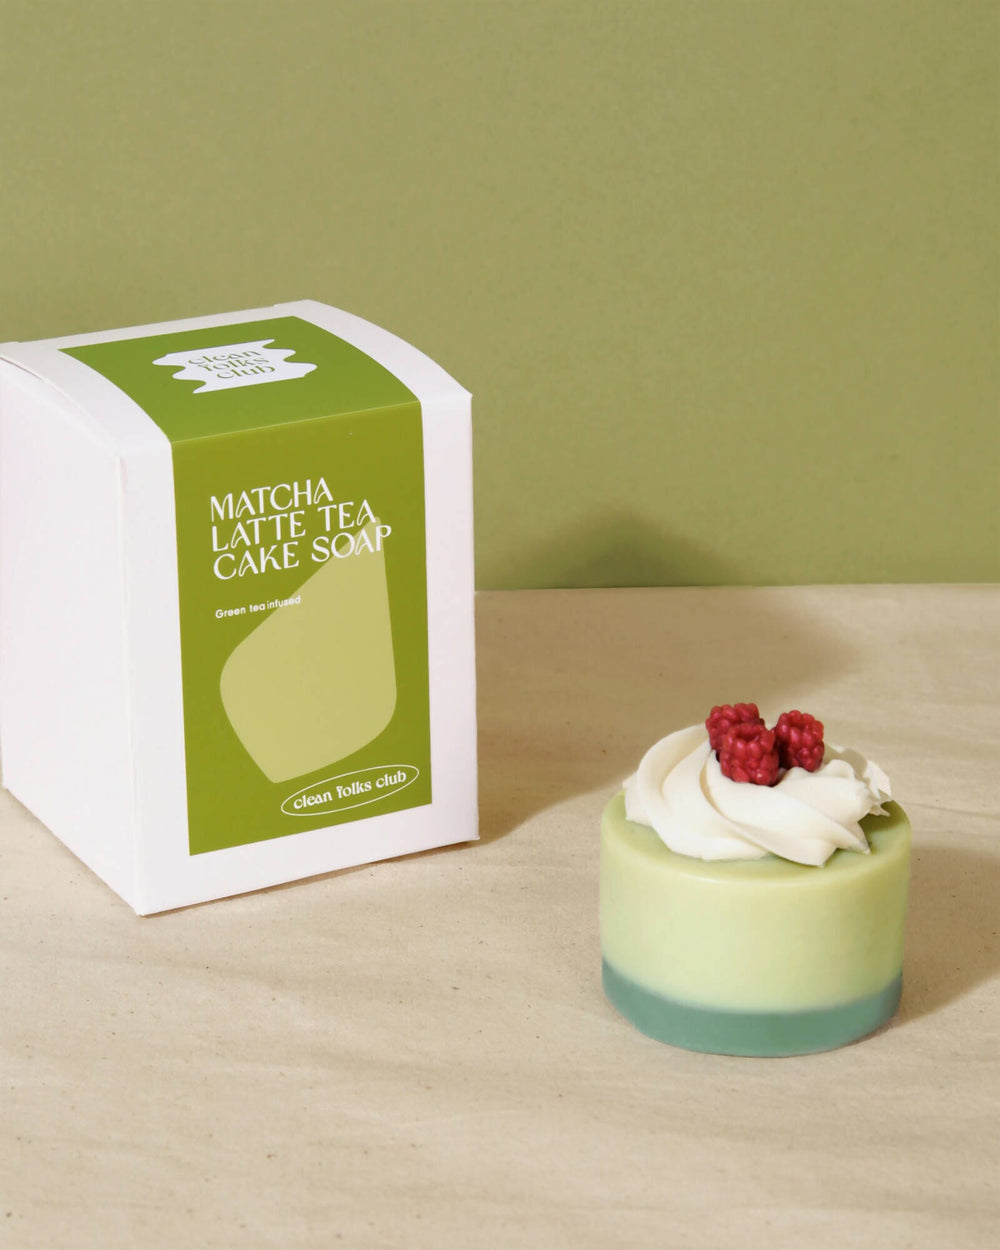 Matcha Latte Tea Cake Soap Soaps Clean Folks Club 